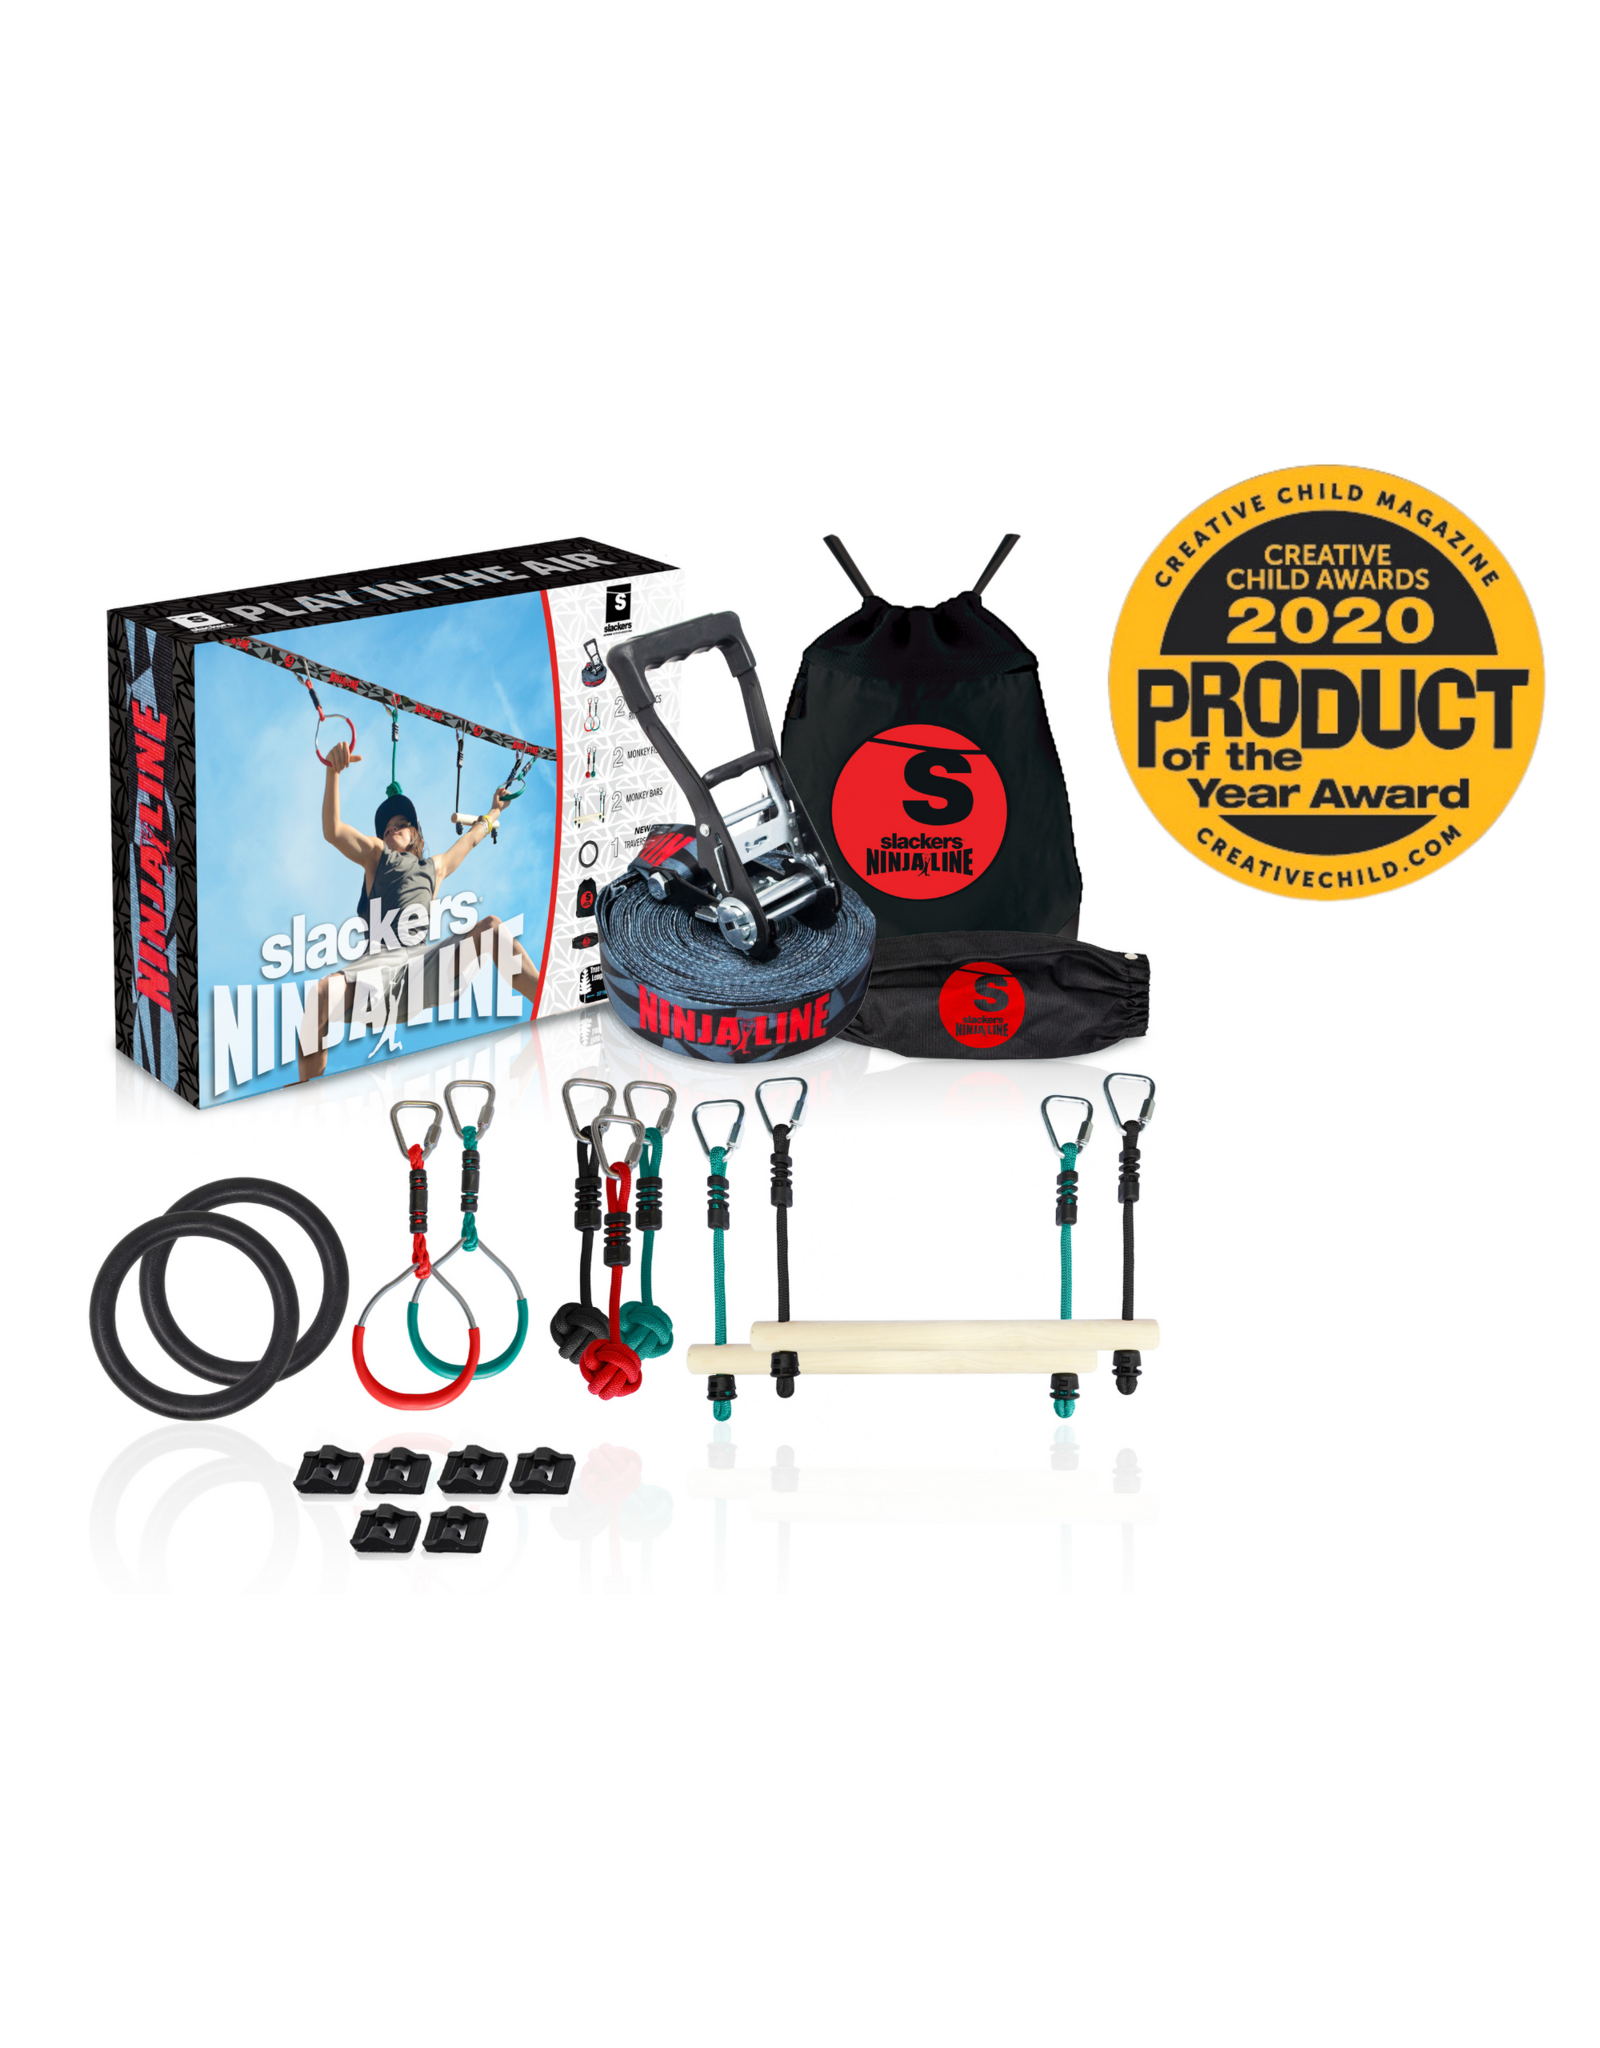 B4 Adventure Slackers NinjaLine 36' Intro Kit